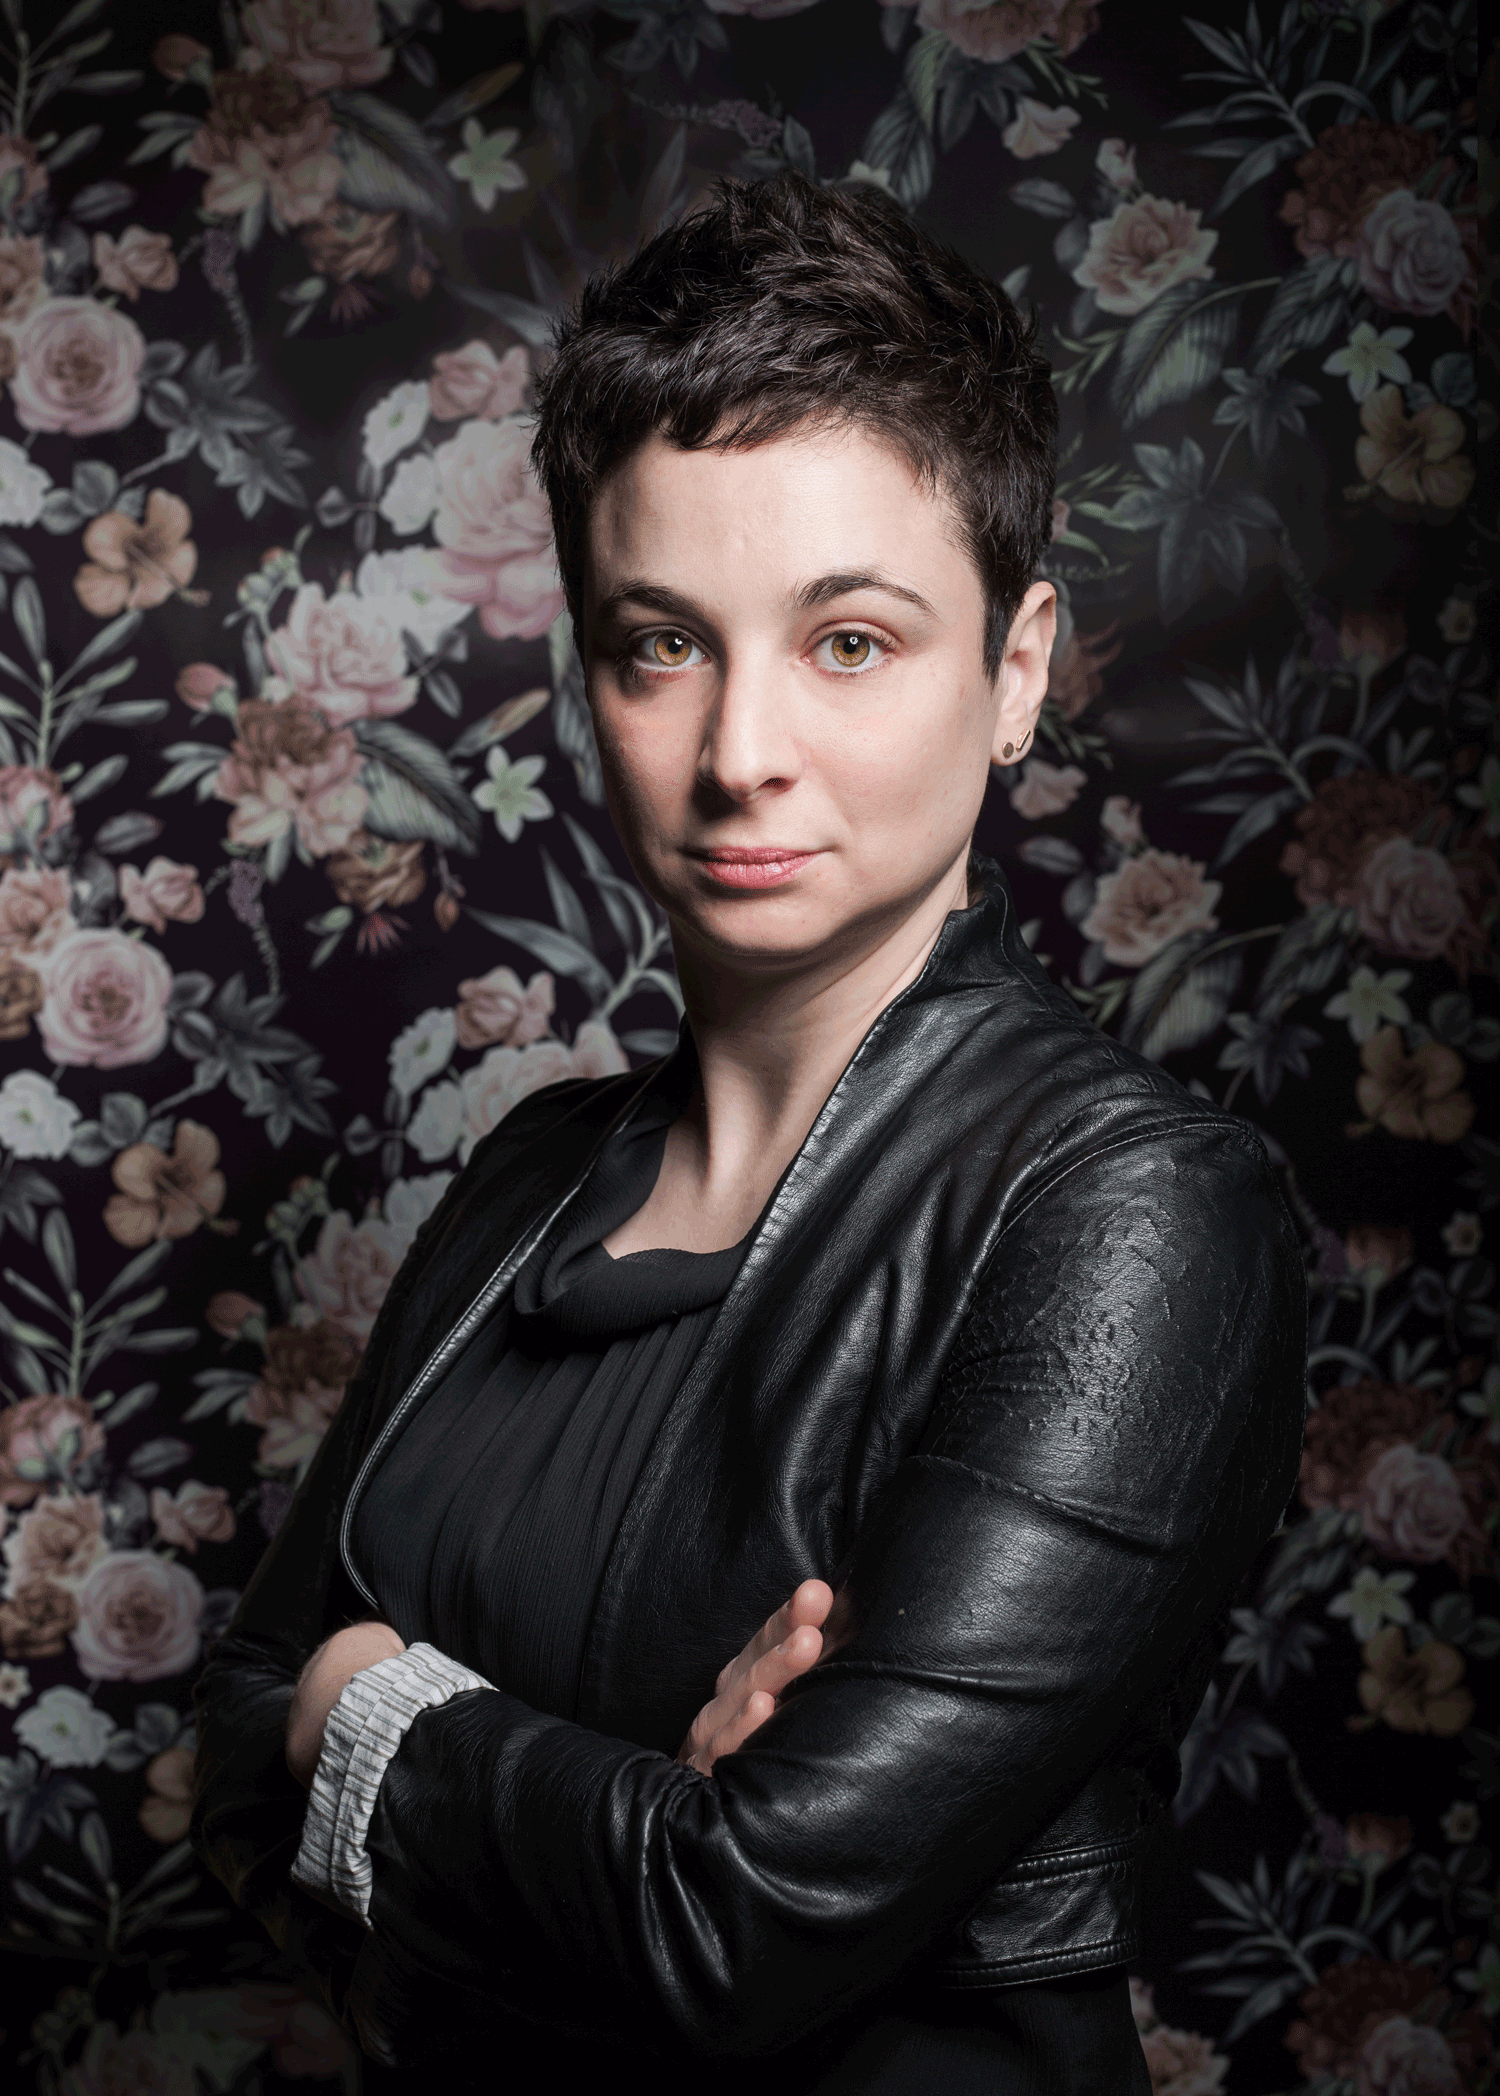 A portrait photo of Lara Ehrlich